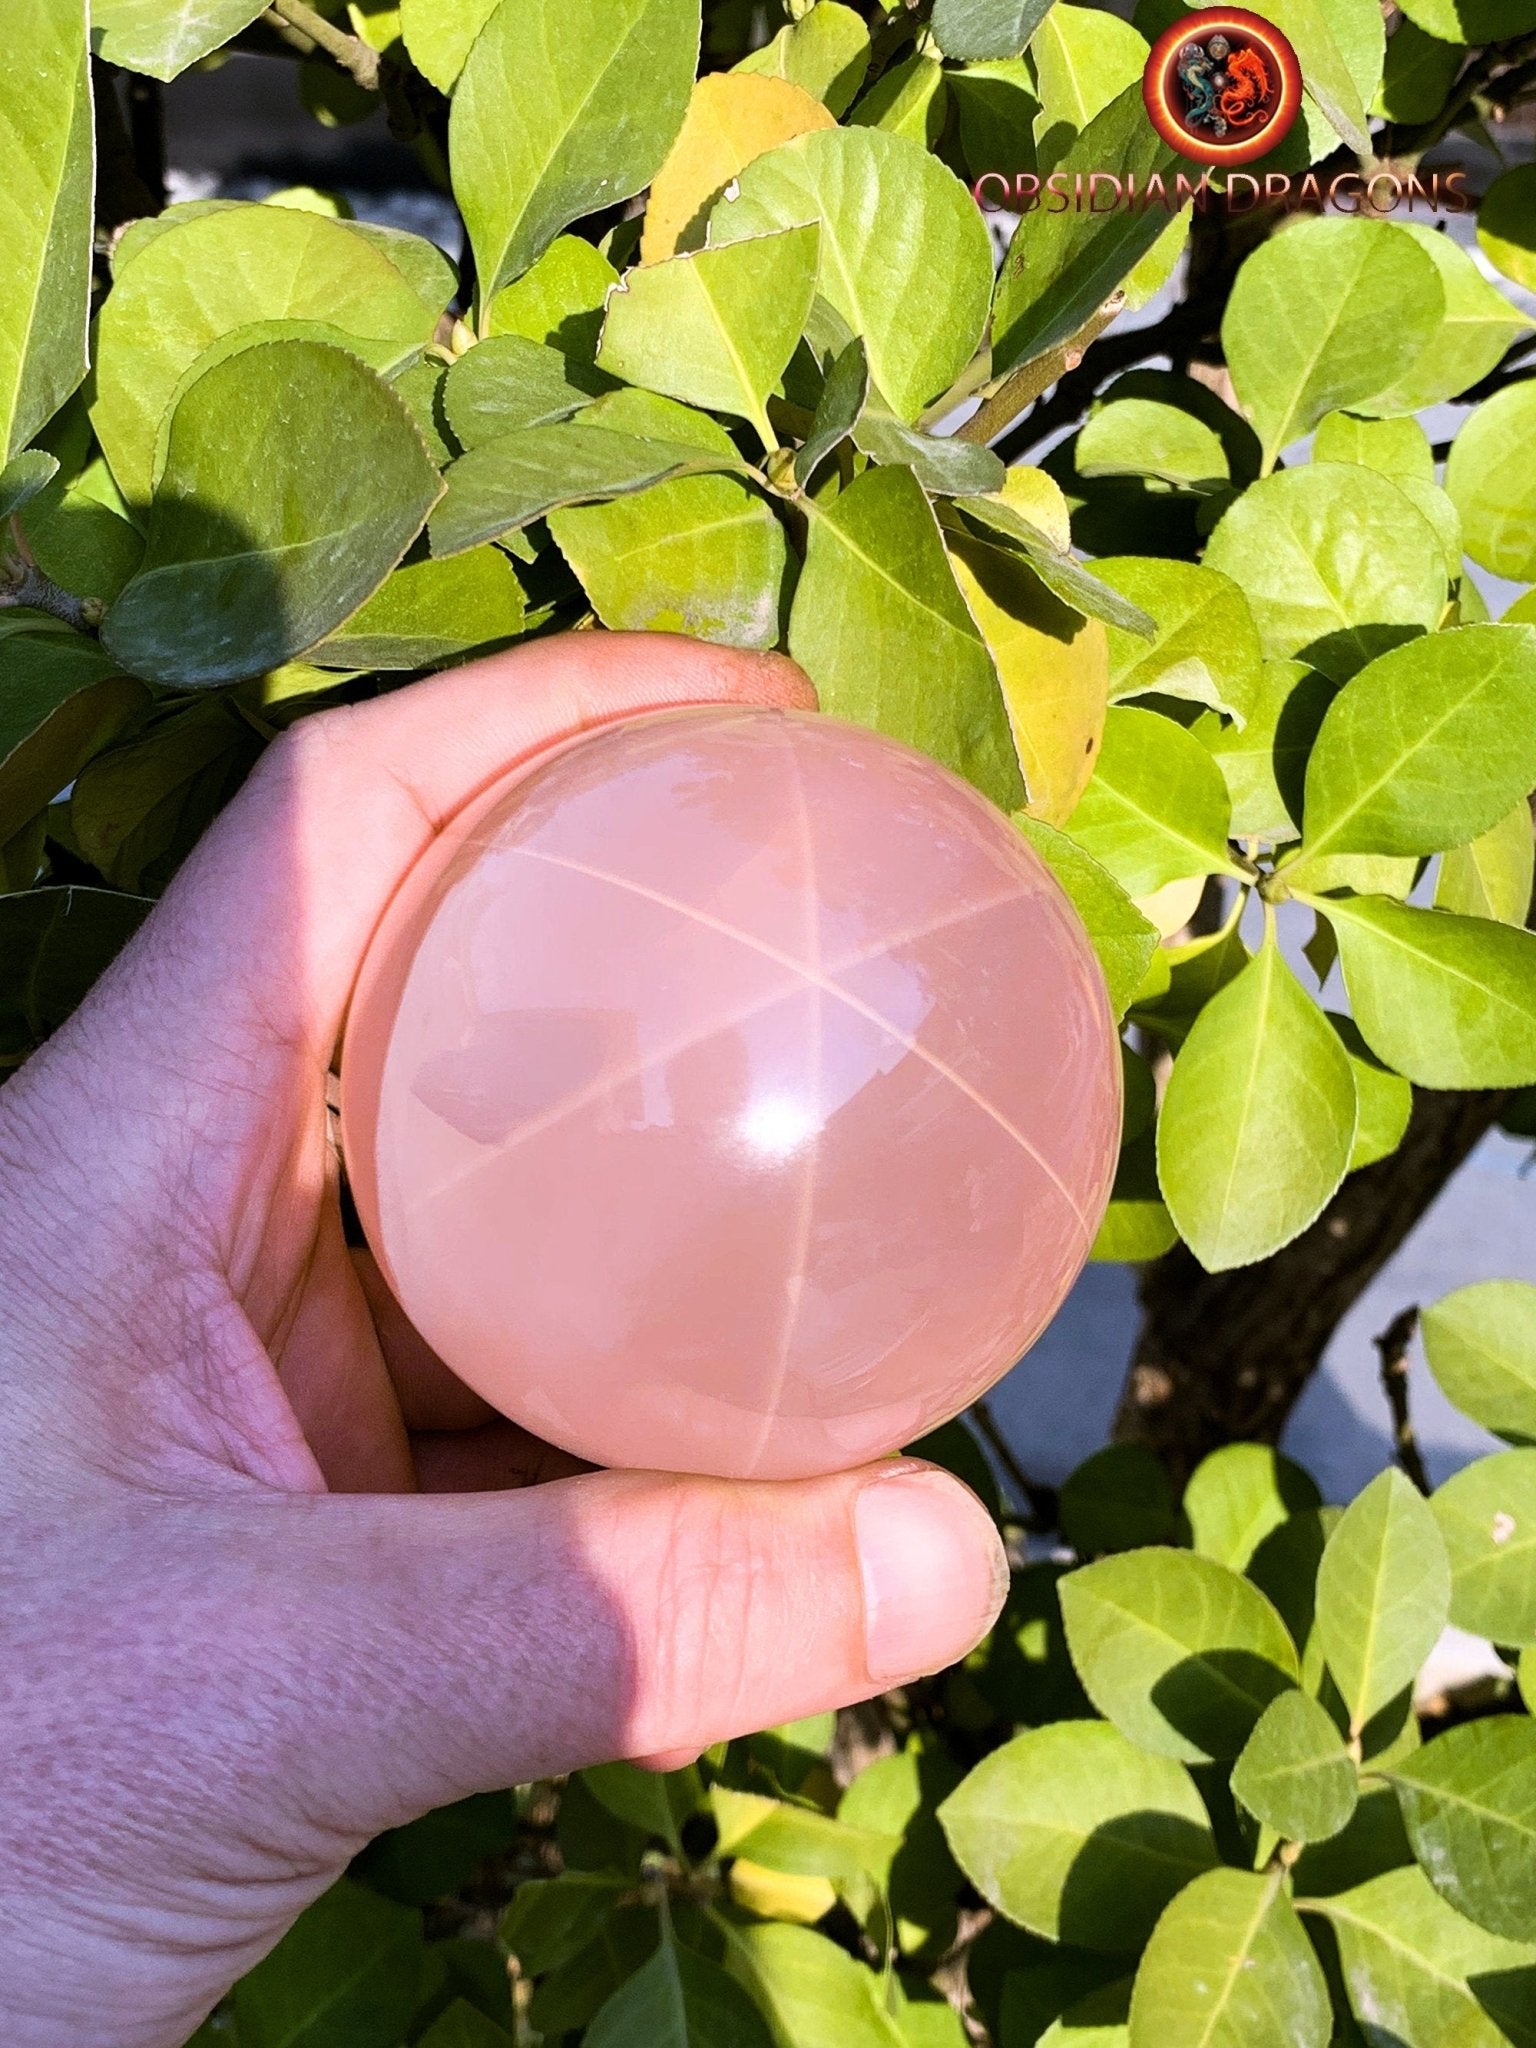 Sphère, quartz rose étoilé rare quartz rose astérié ou quartz rose astérisé. Provenance du Mozambique. quartz rose naturel. 70mm de diamètre - obsidian dragon